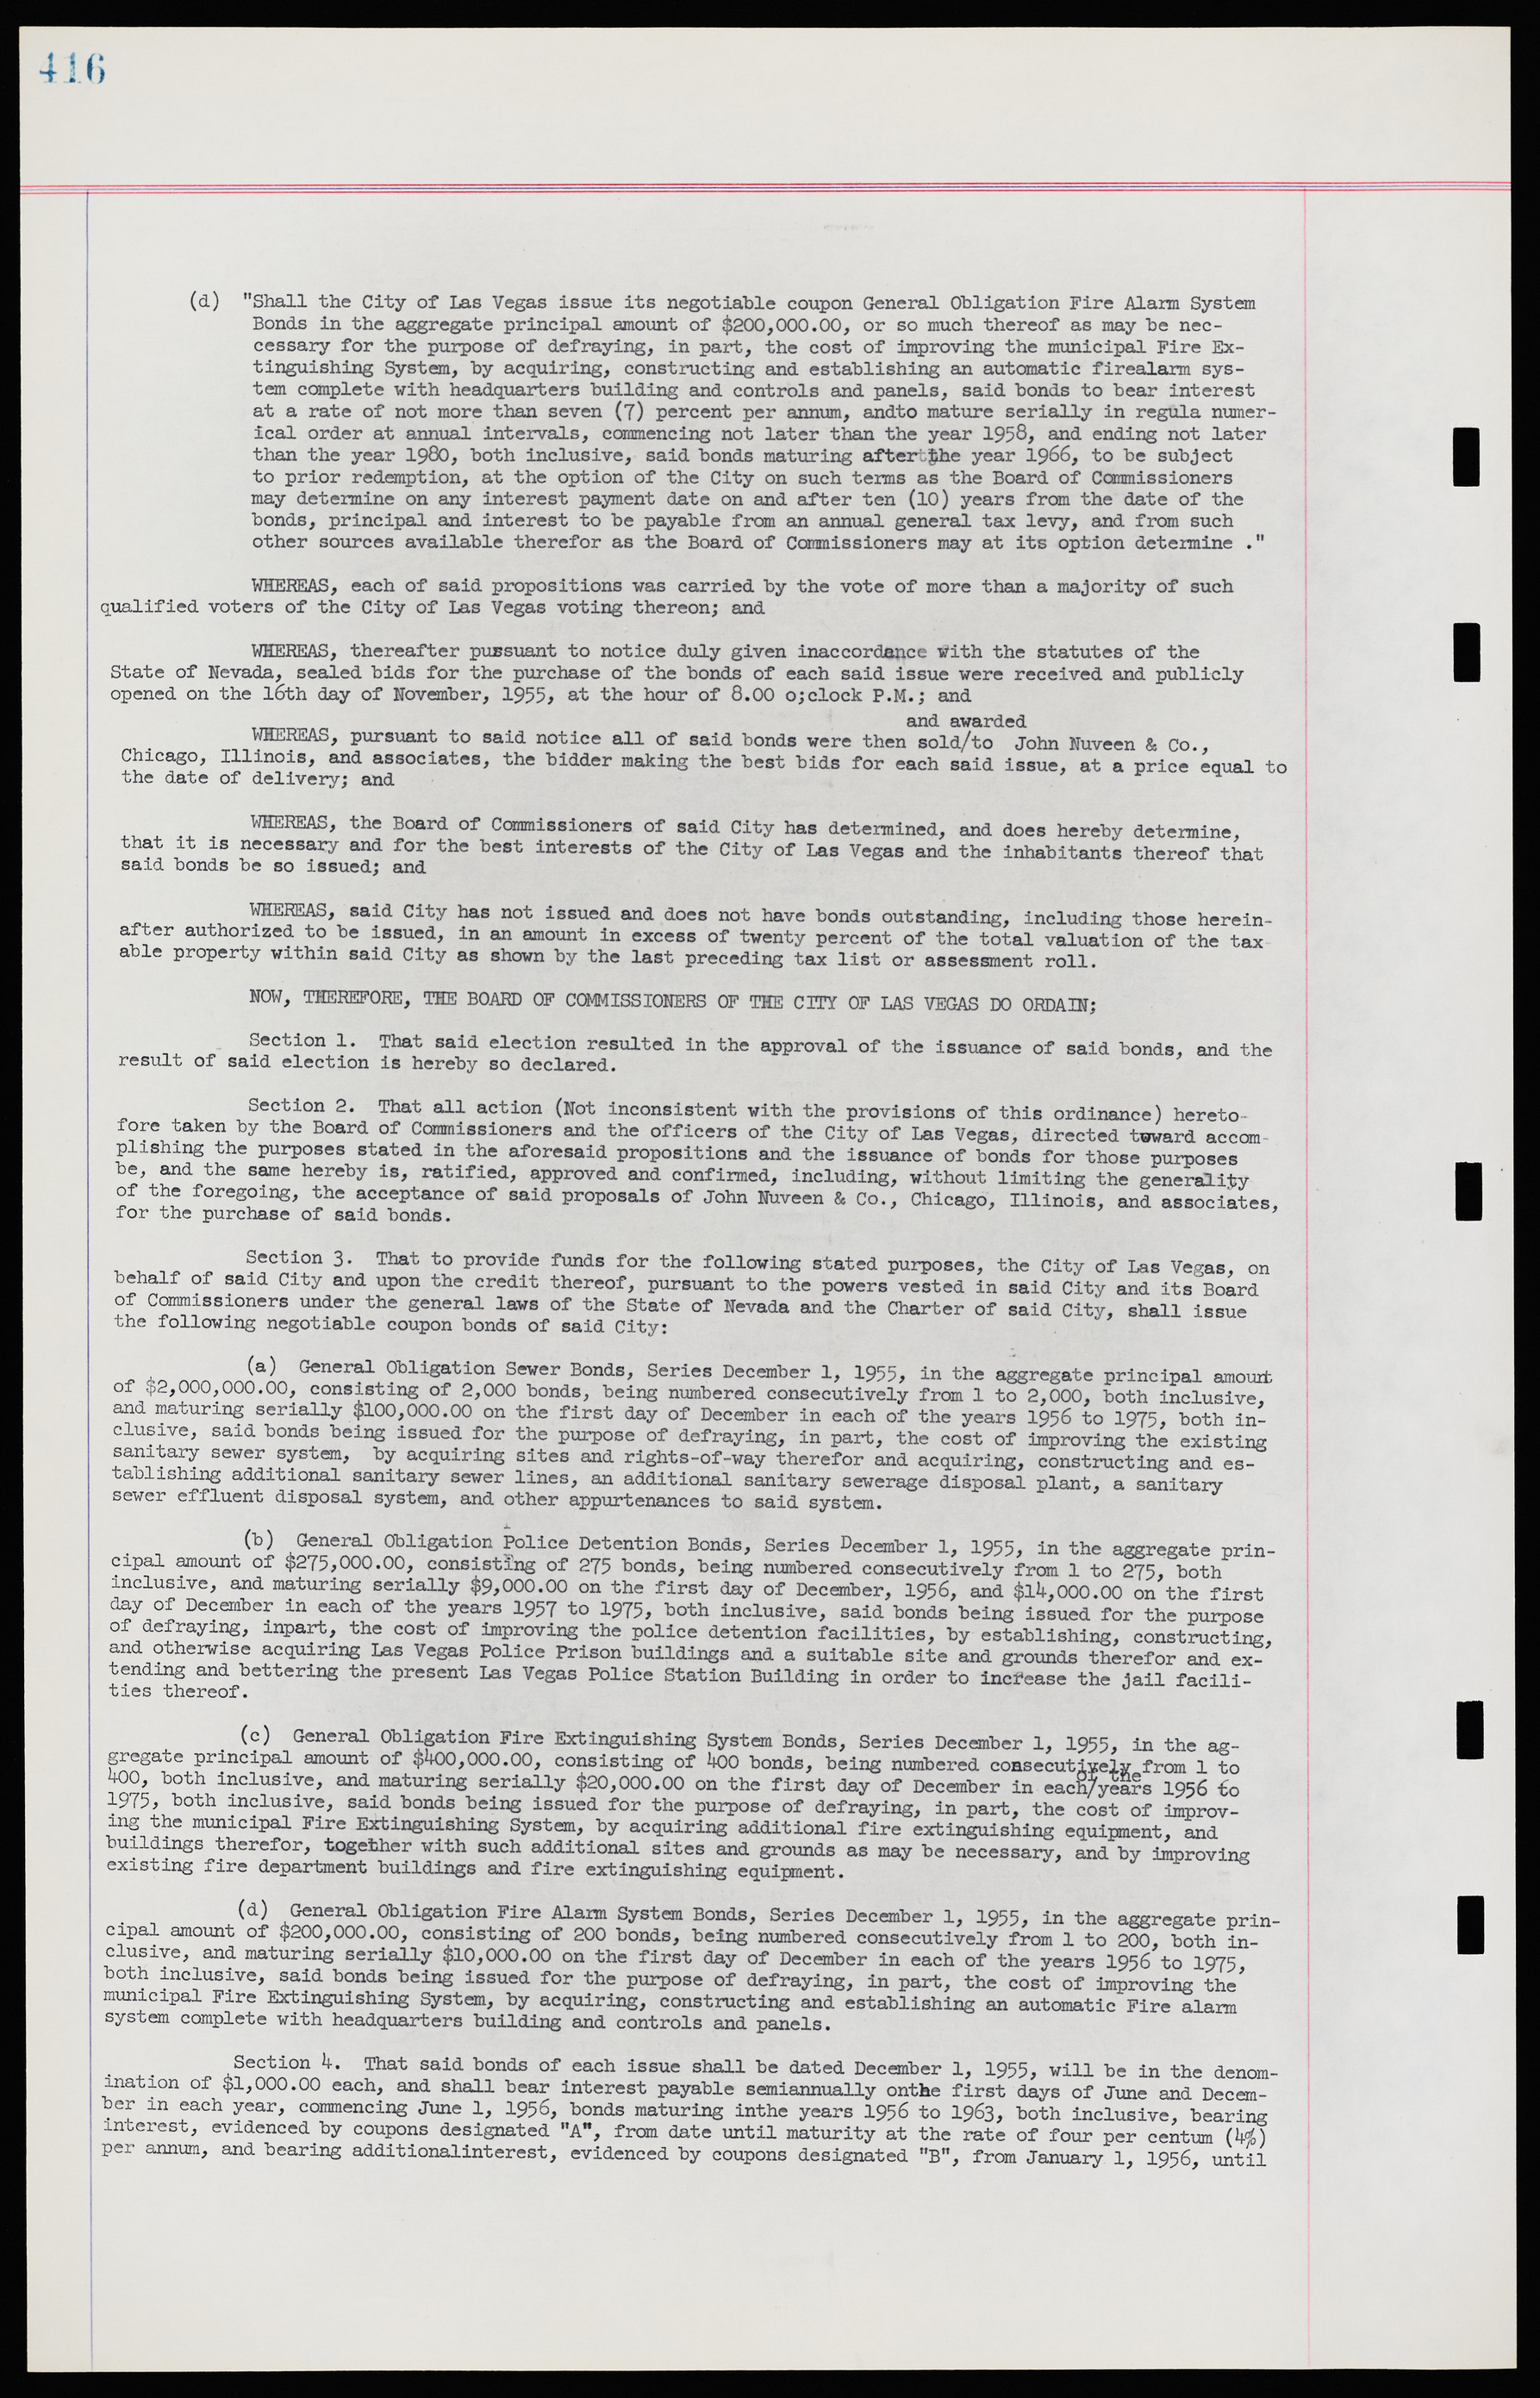 Las Vegas City Ordinances, November 13, 1950 to August 6, 1958, lvc000015-424